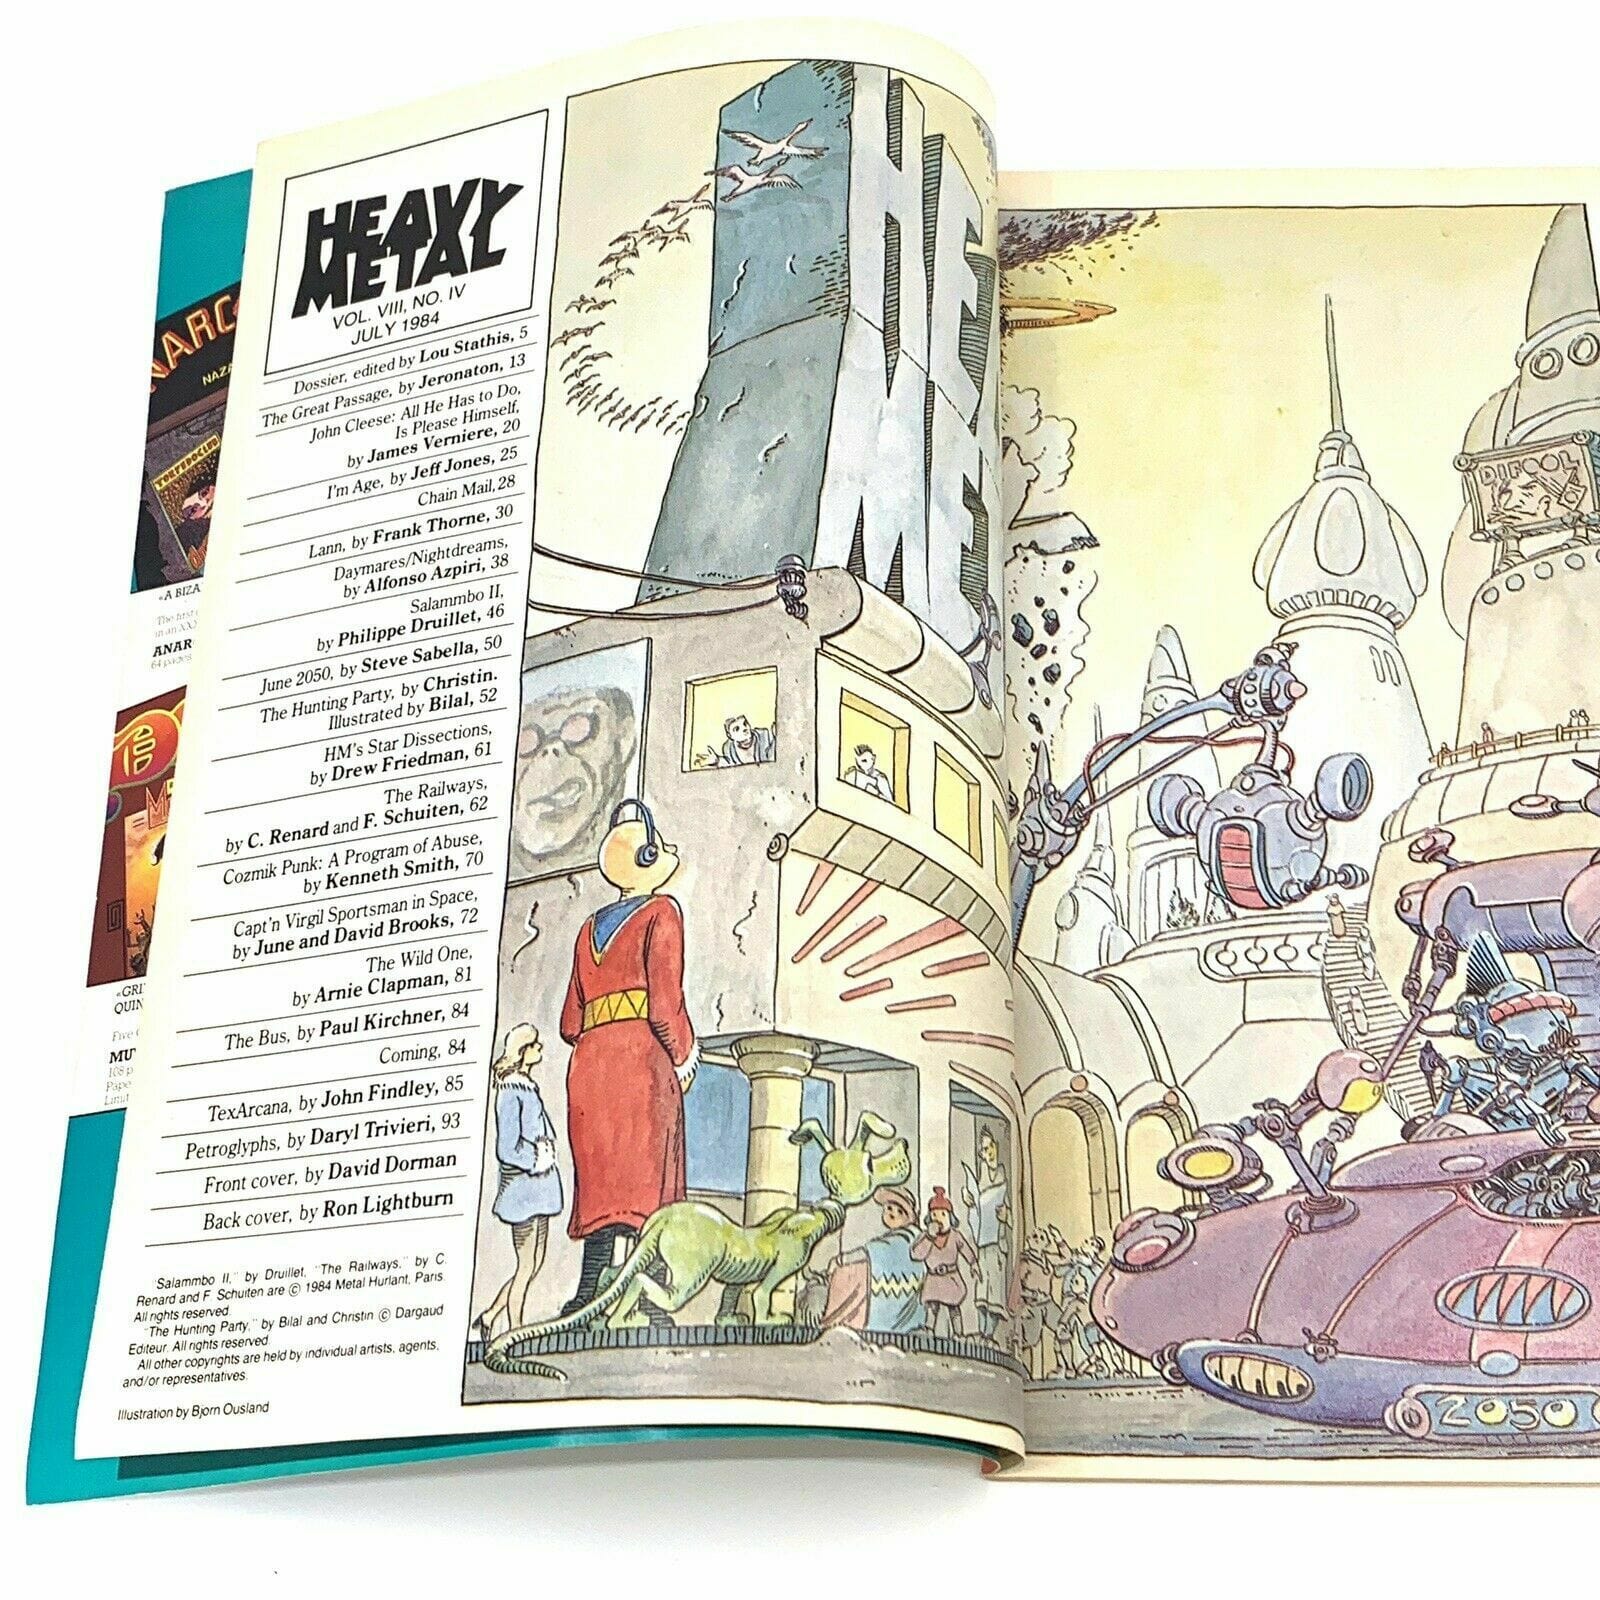 HEAVY METAL - Adult Illustrative Fantasy Magazine - July 1984 - parsimonyshoppes